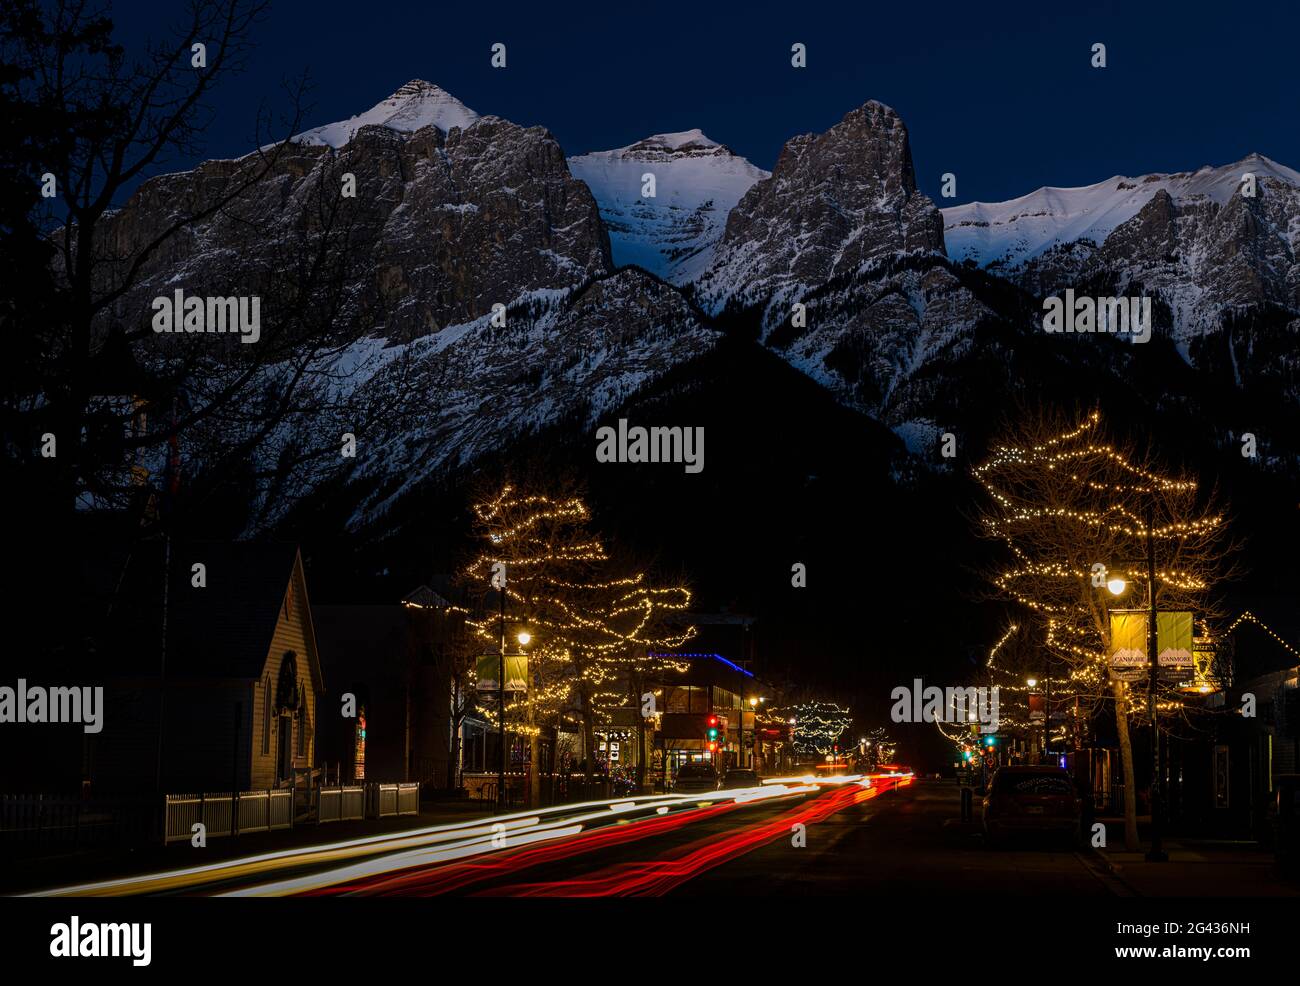 Illuminations de Noël sur main Street la nuit, Canmore, Alberta, Canada Banque D'Images